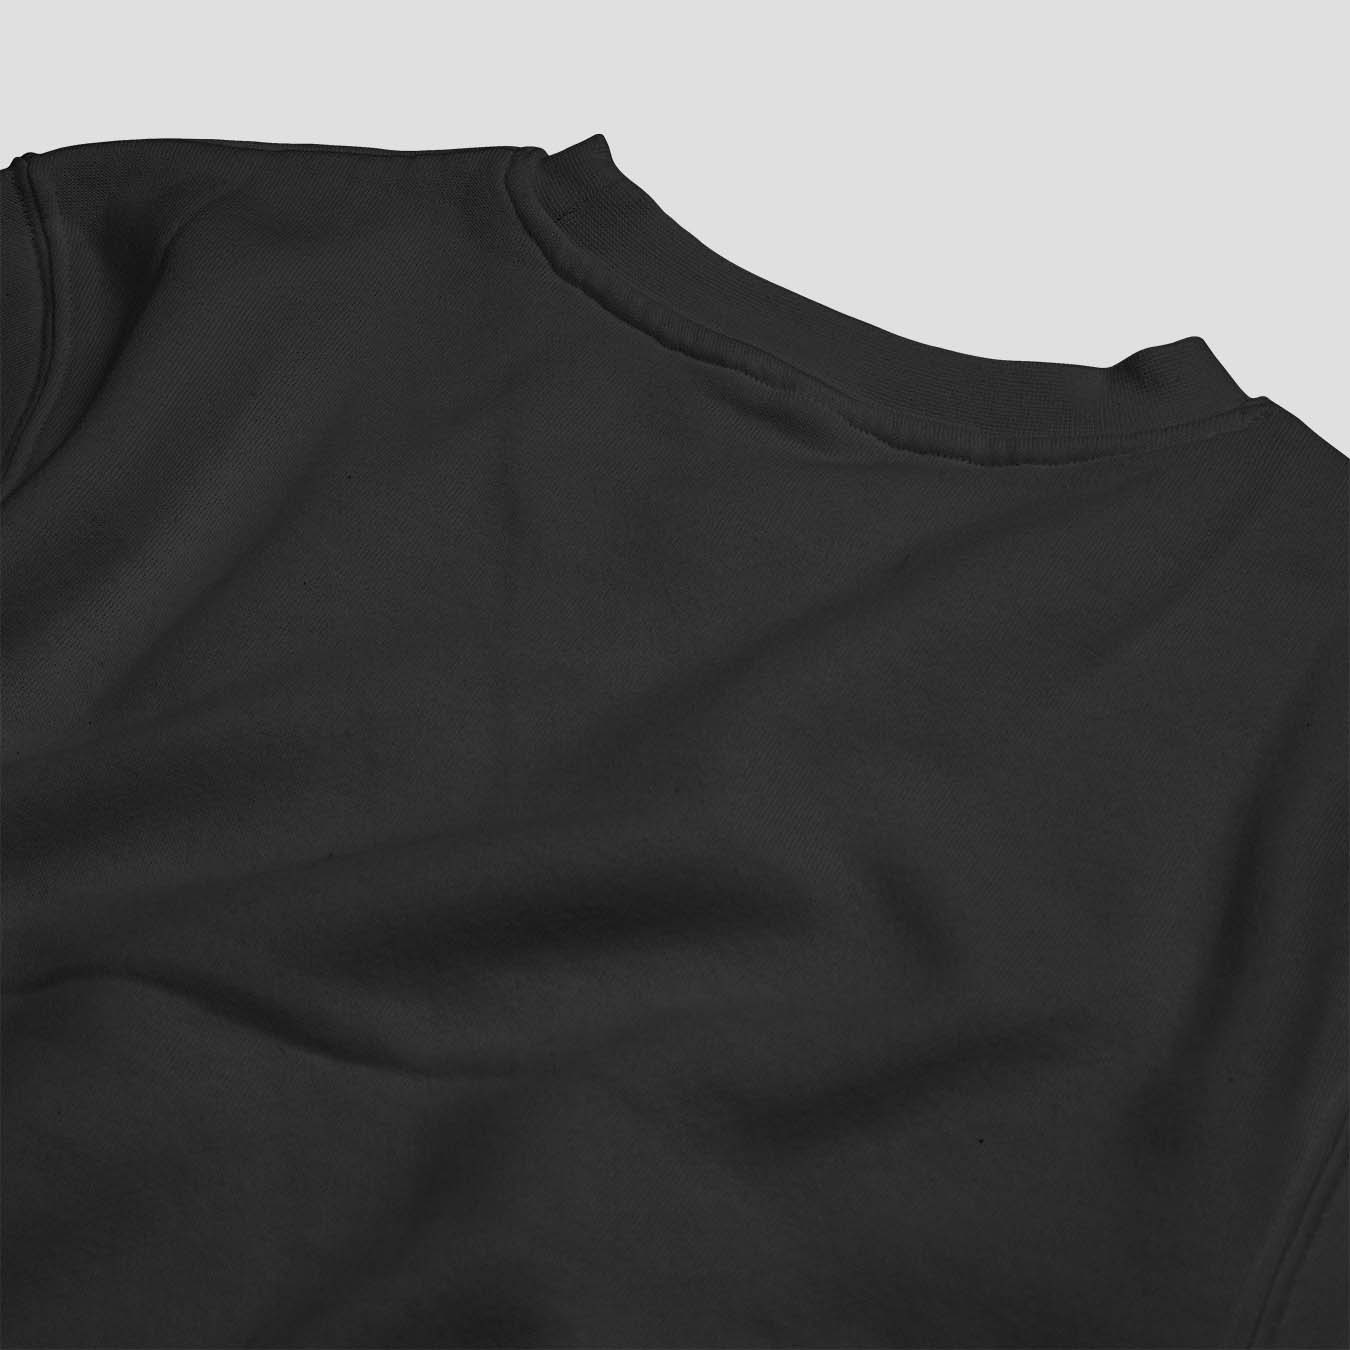 Essential Crewneck Sweatshirt - Black - keos.life